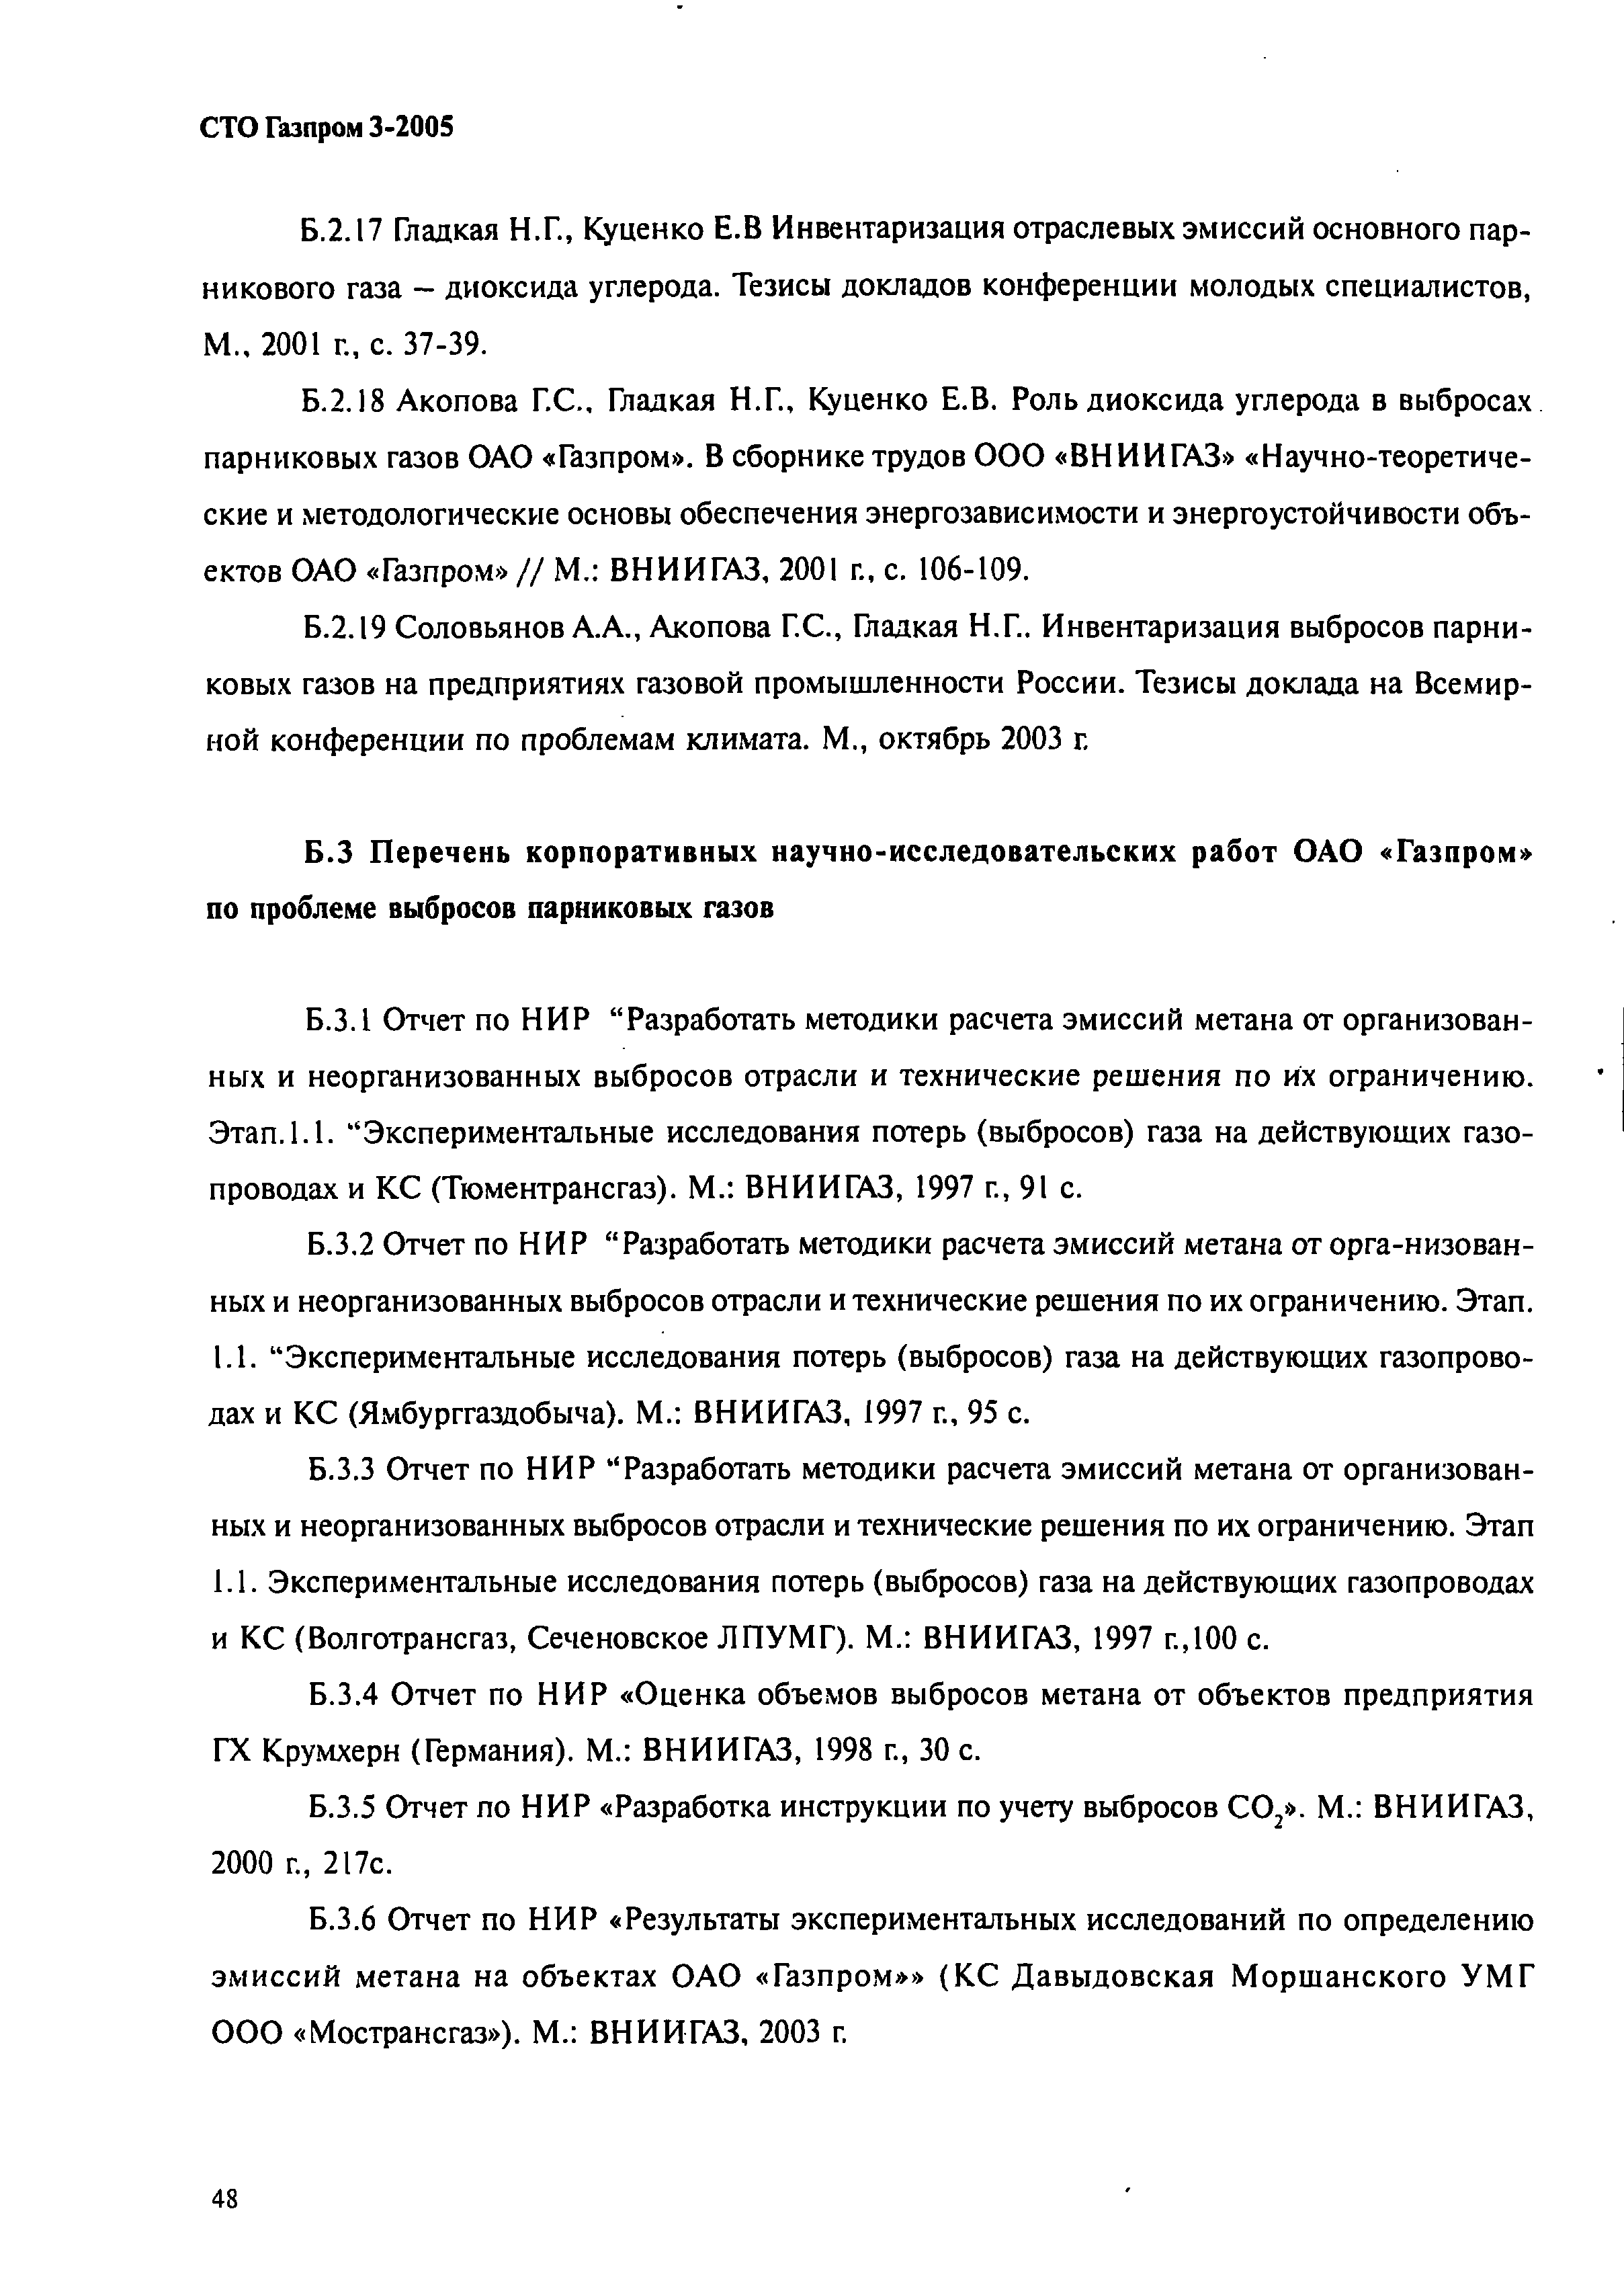 СТО Газпром 3-2005